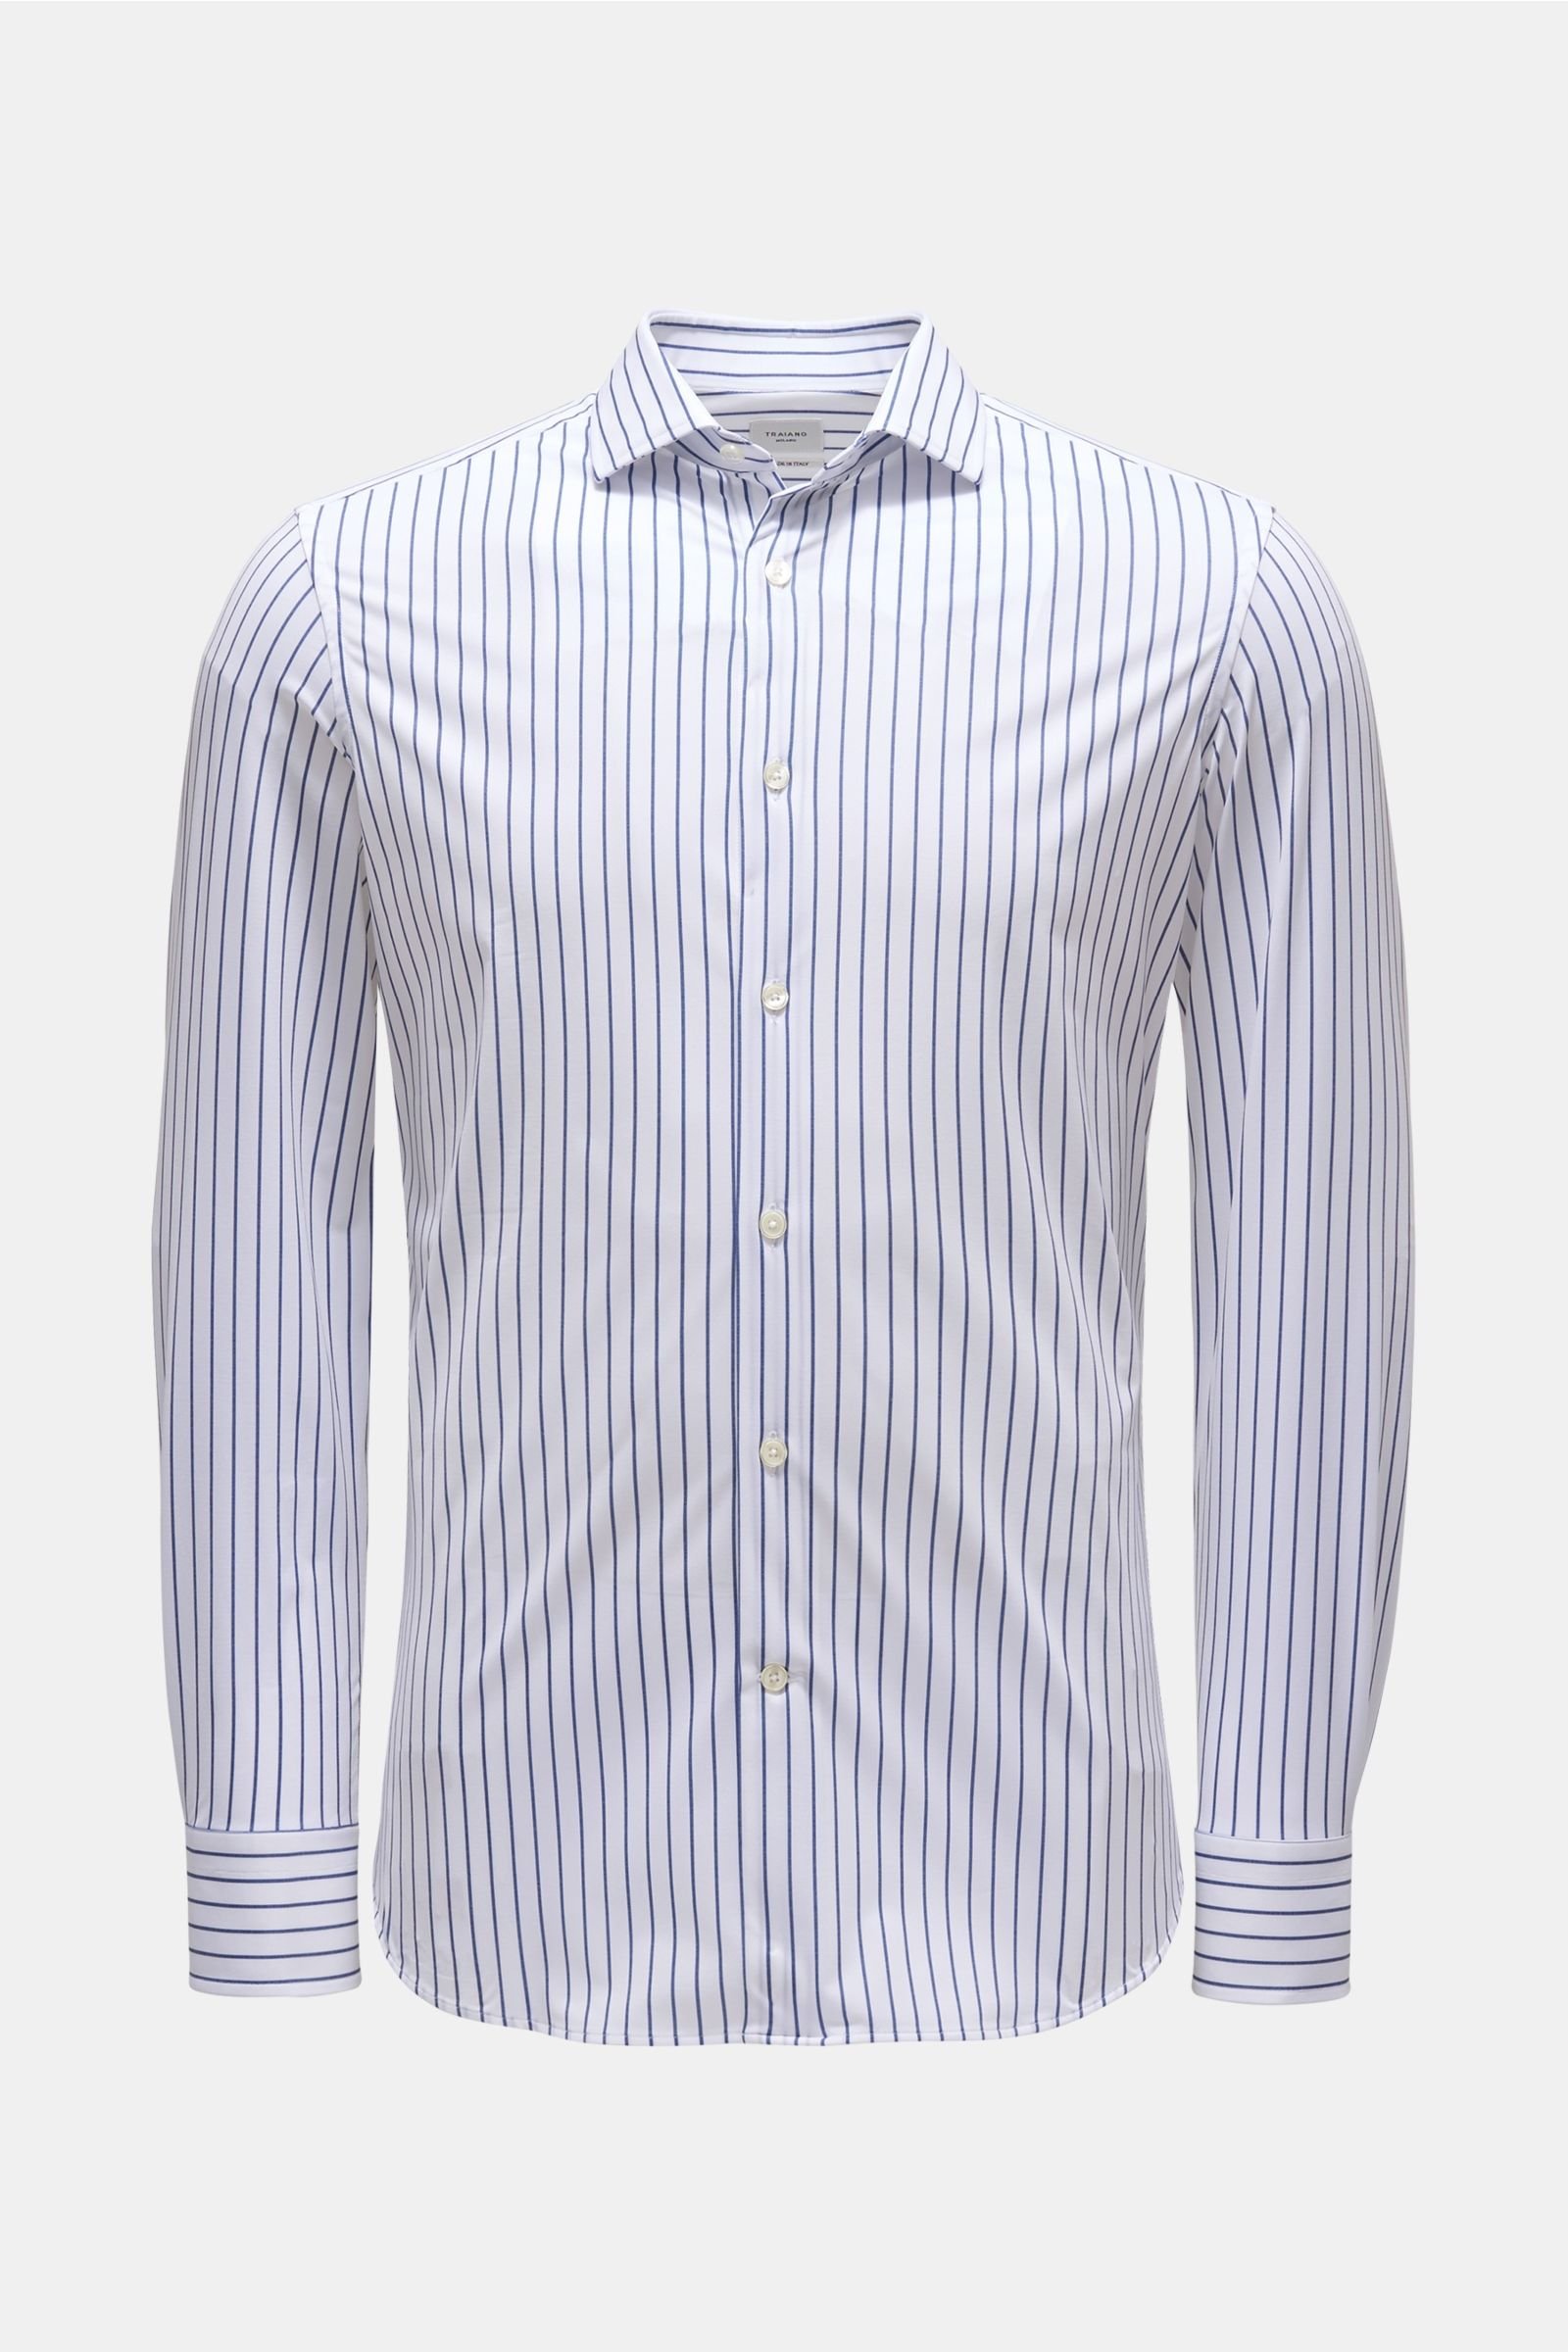 Jersey shirt 'Rossini Radical Shirt' shark collar white/dark blue striped